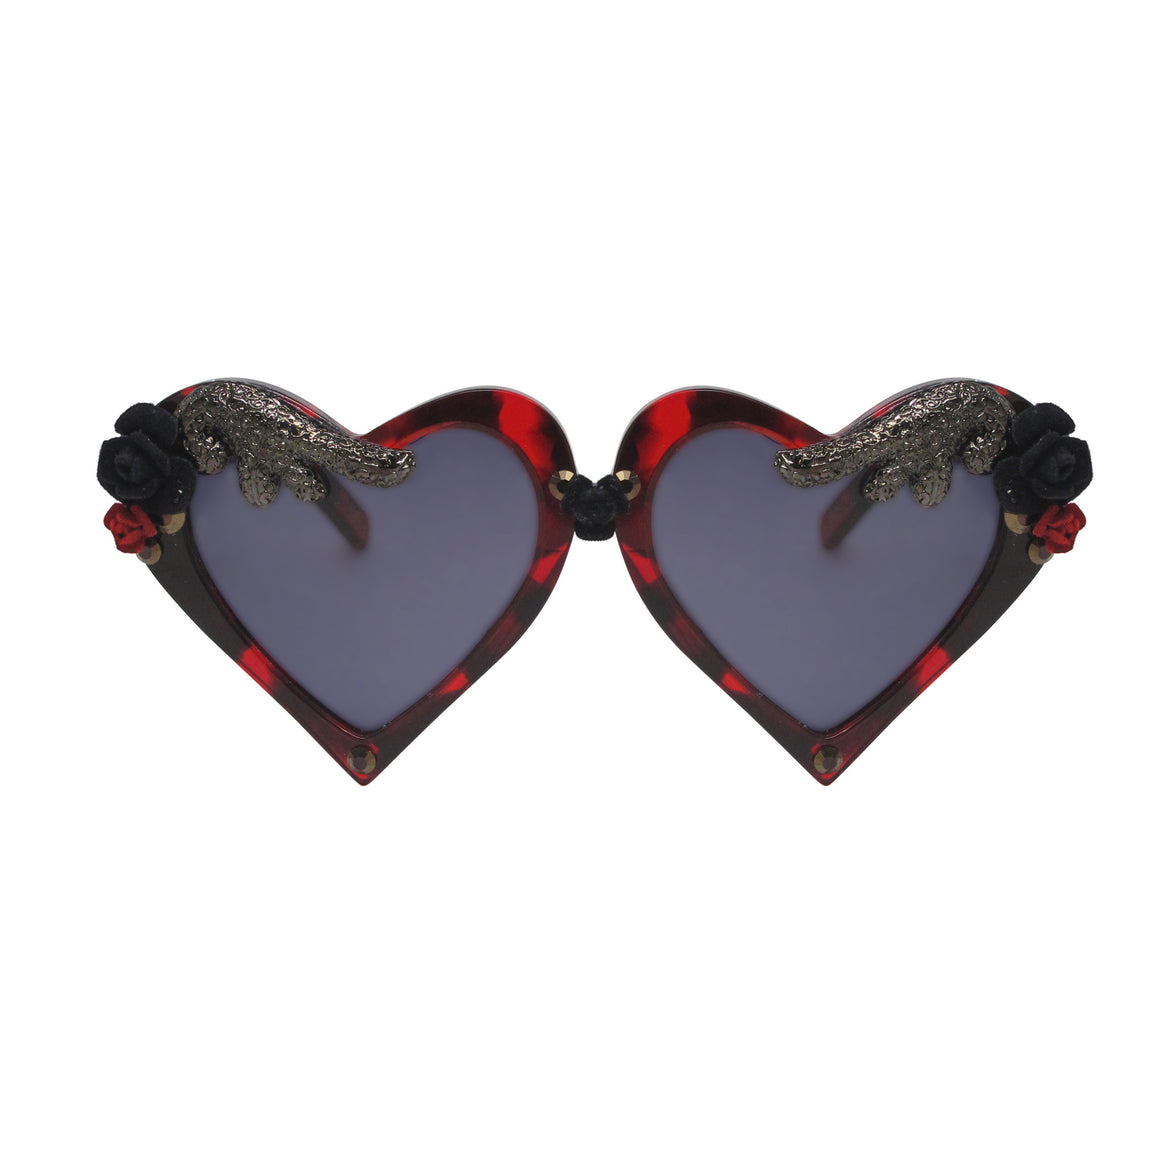 Agnew wing embellished heart shaped frames